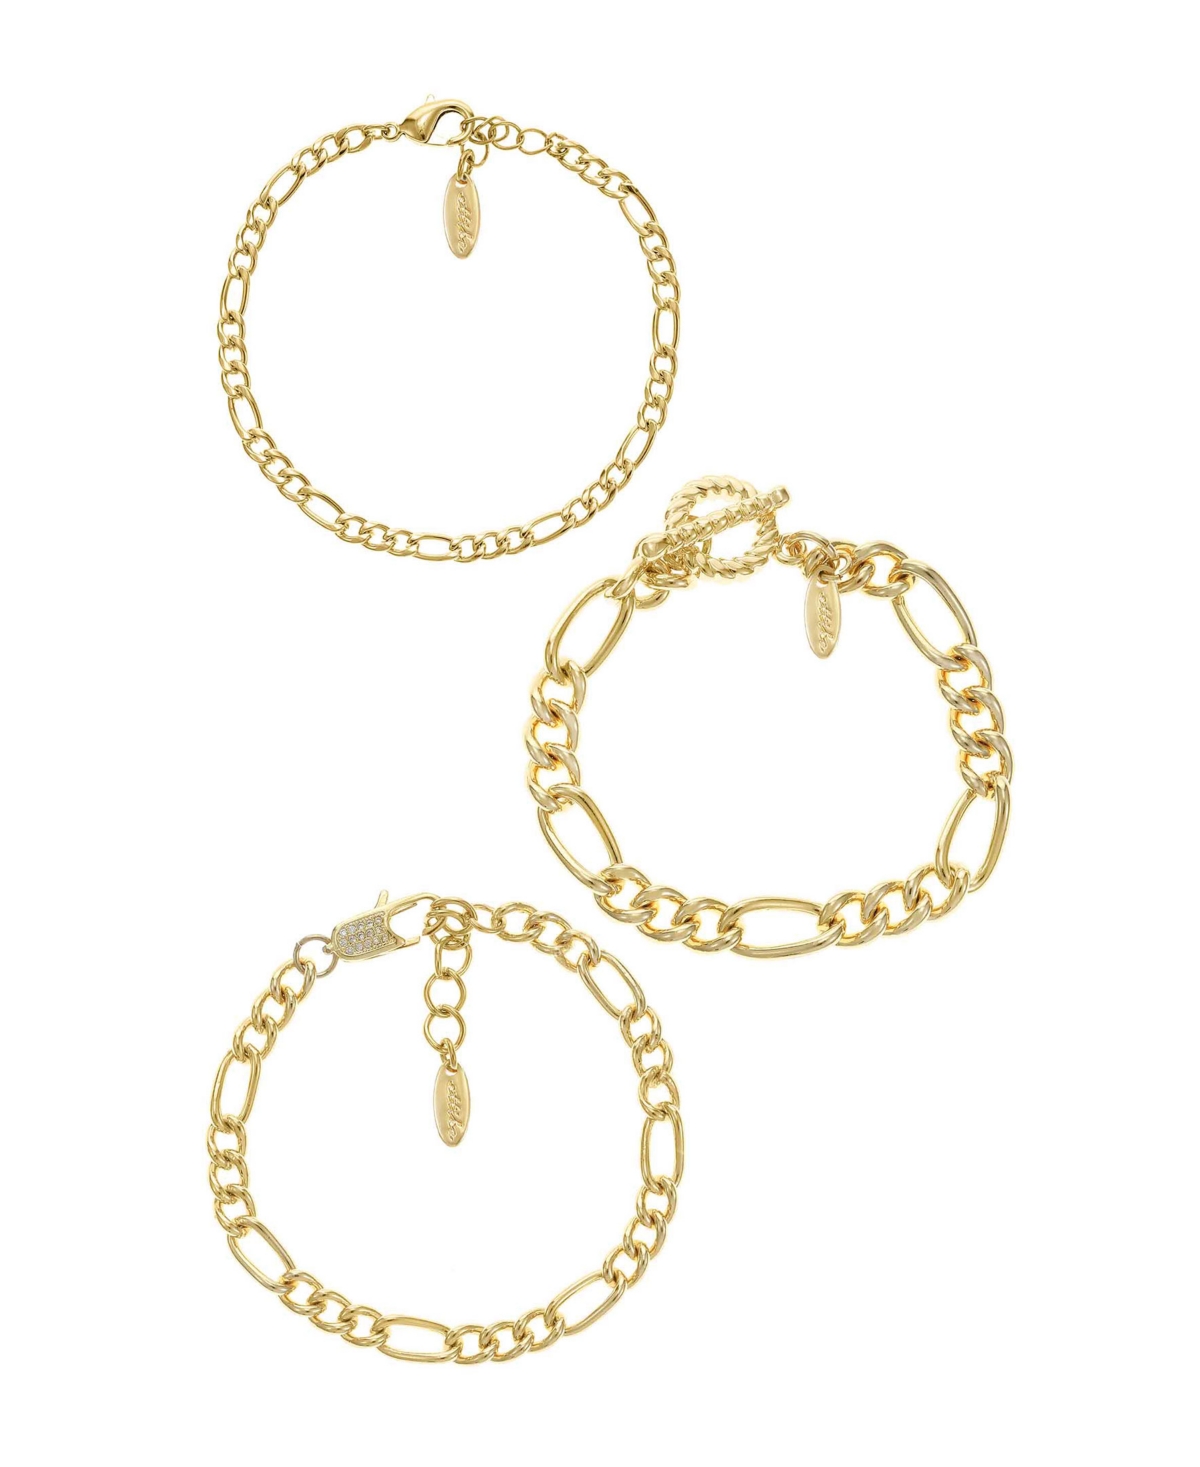 Women's Chain Bracelet Set, 3 Piece - Gold